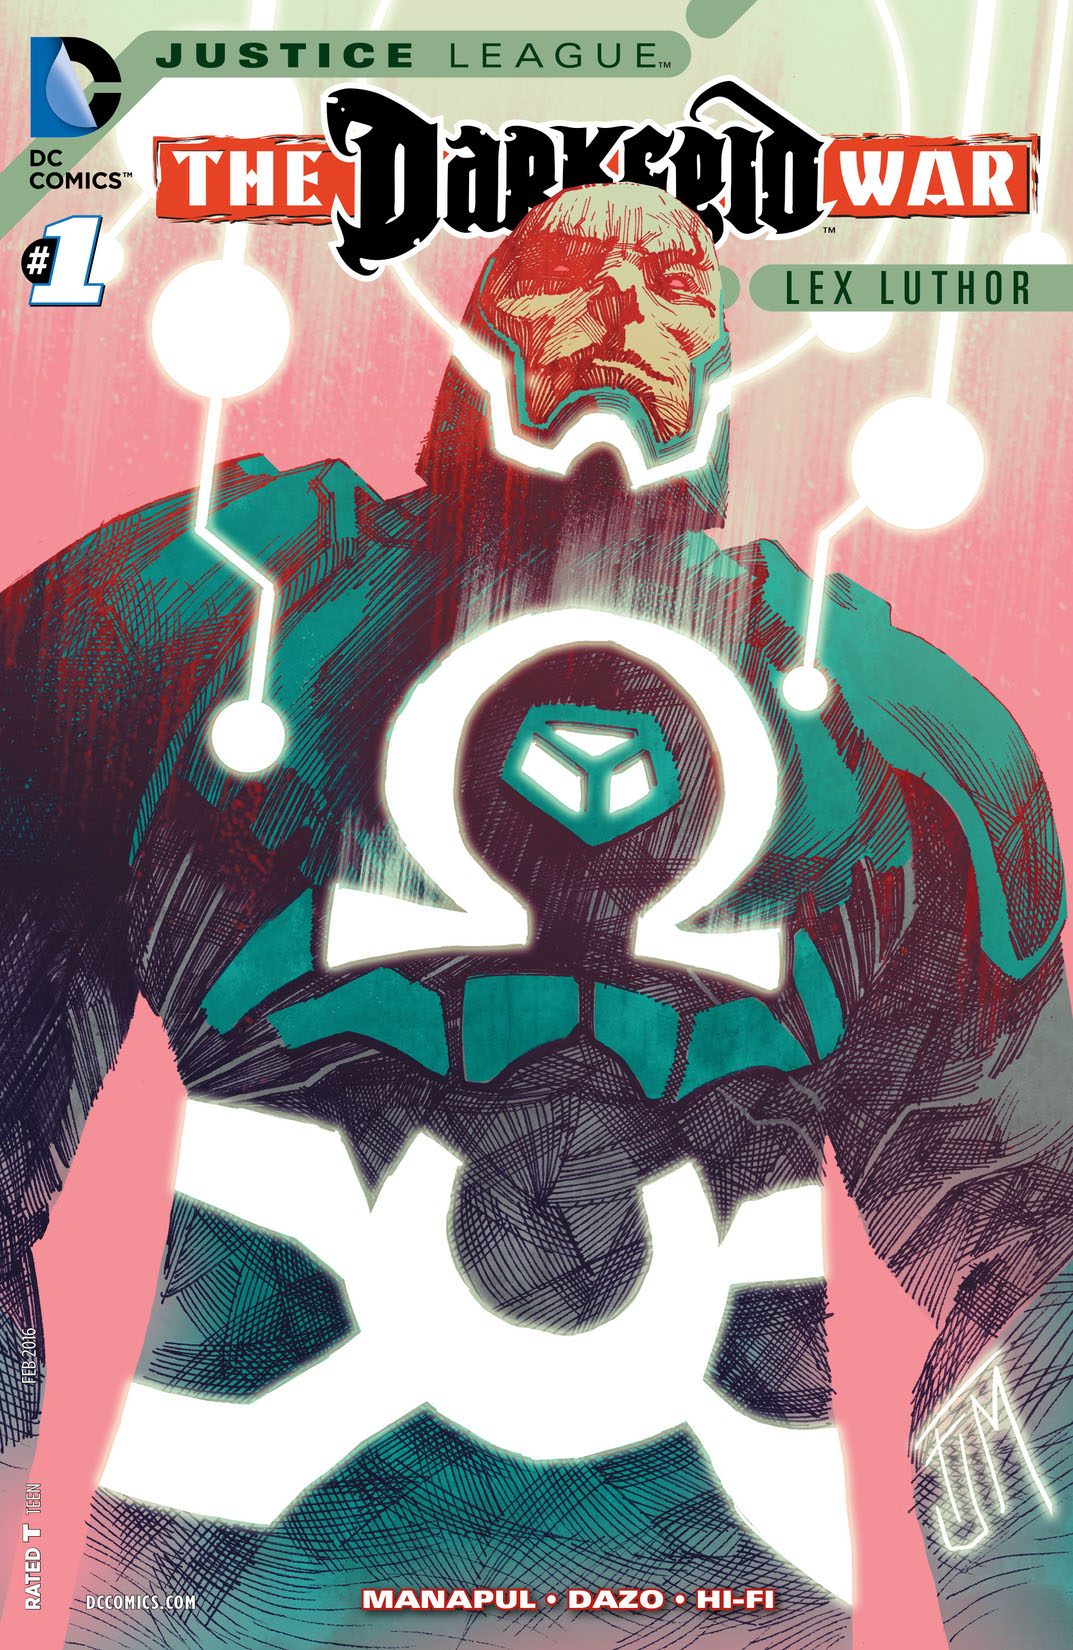 Justice League: Darkseid War: Lex Luthor #1 preview images